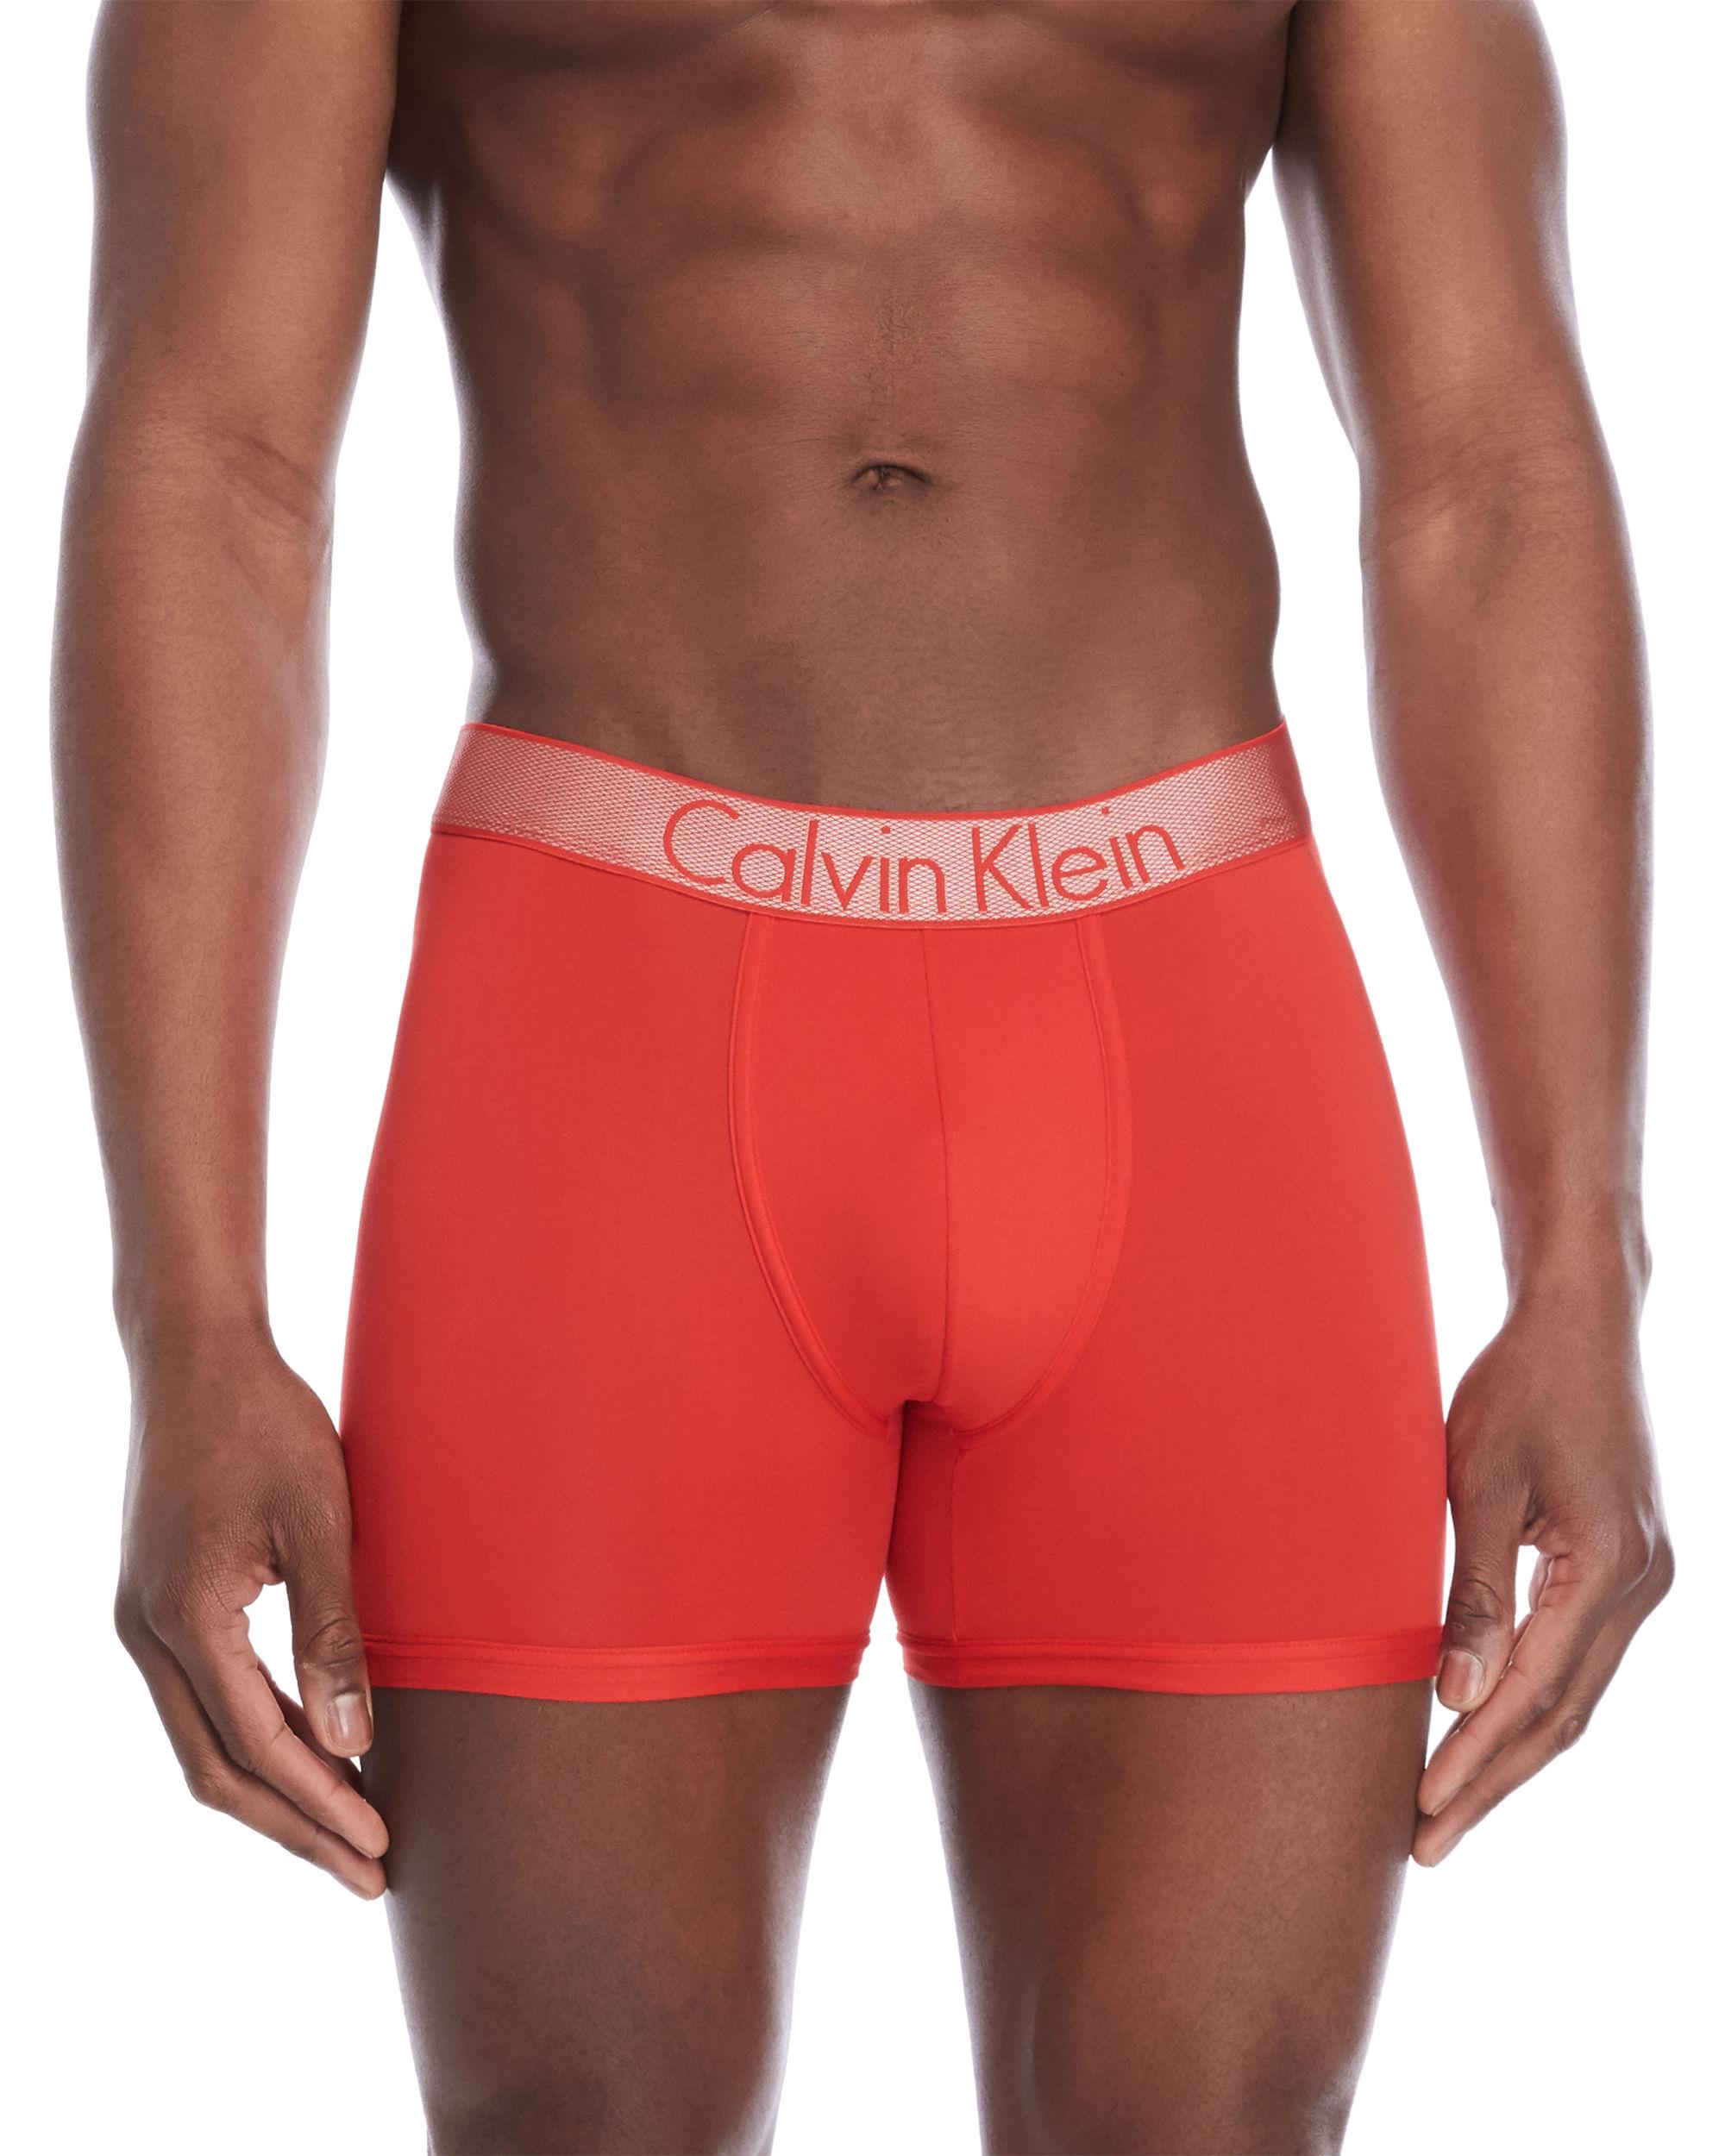 Lyst - Calvin Klein Customized Stretch Microfiber Boxer Briefs in Red for Men